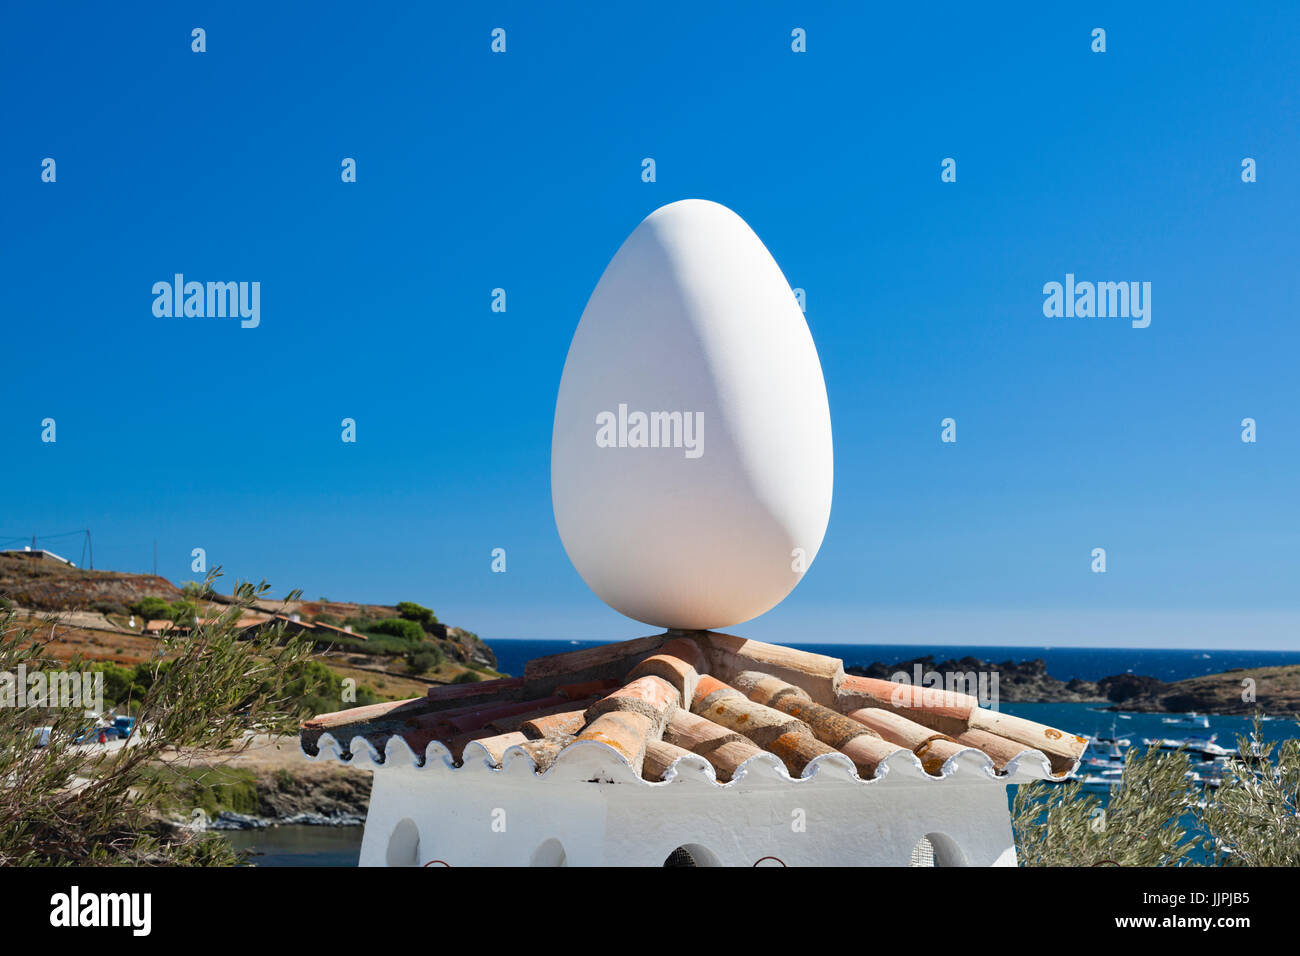 https://c8.alamy.com/comp/JJPJB5/a-giant-egg-sculpture-by-salvador-dali-overlooks-the-costa-brava-coast-JJPJB5.jpg